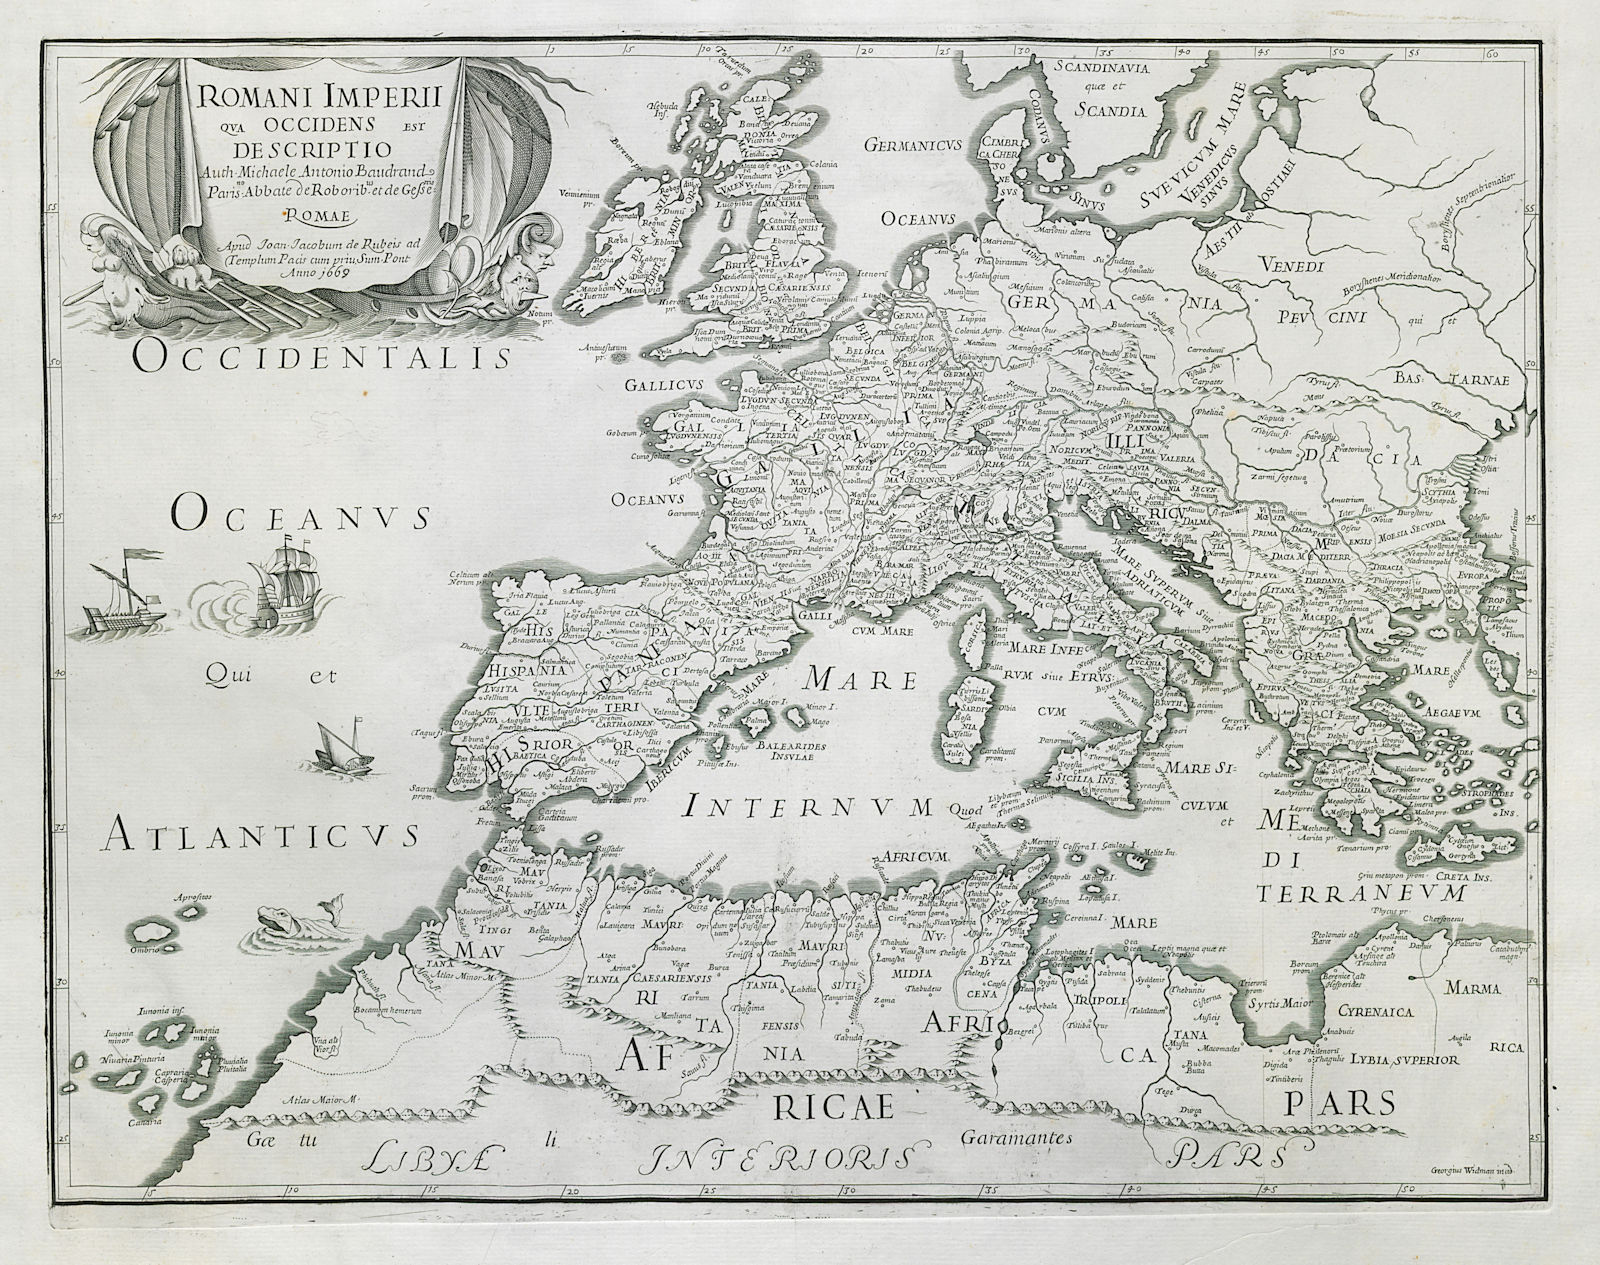 Romani Imperii Qua Occidens est Descriptio. Western Roman Empire. ROSSI 1669 map